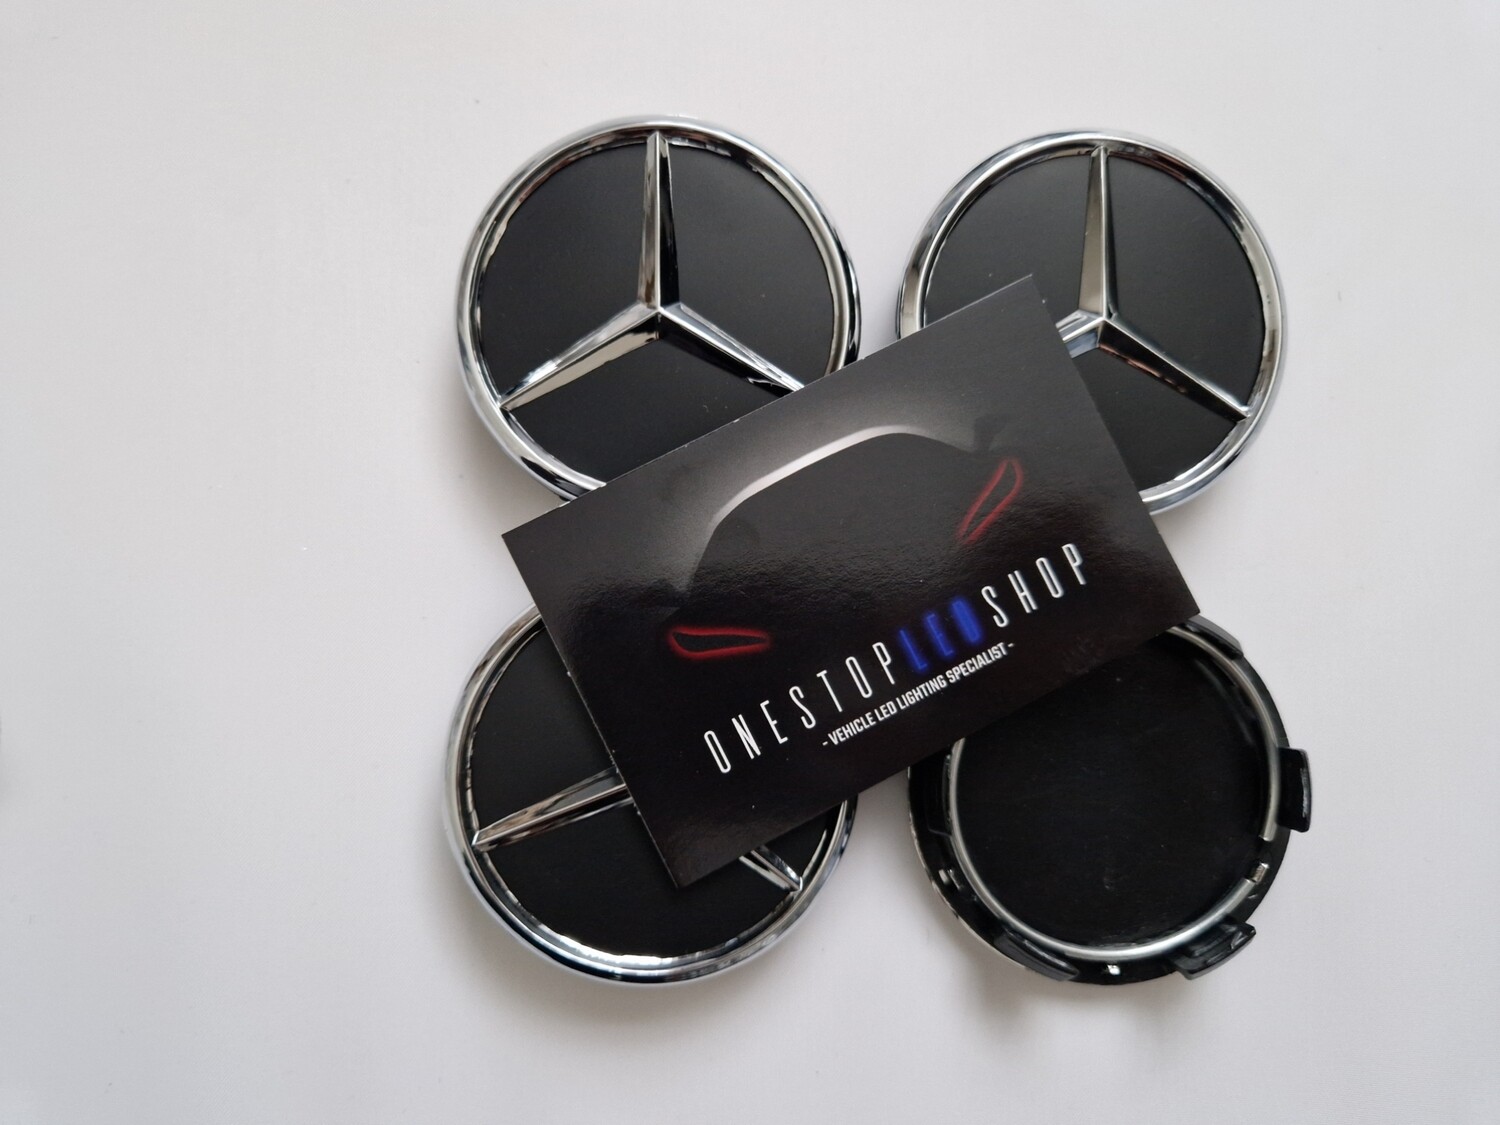 Mercedes Benz 75mm black chrome alloy wheel center hub caps